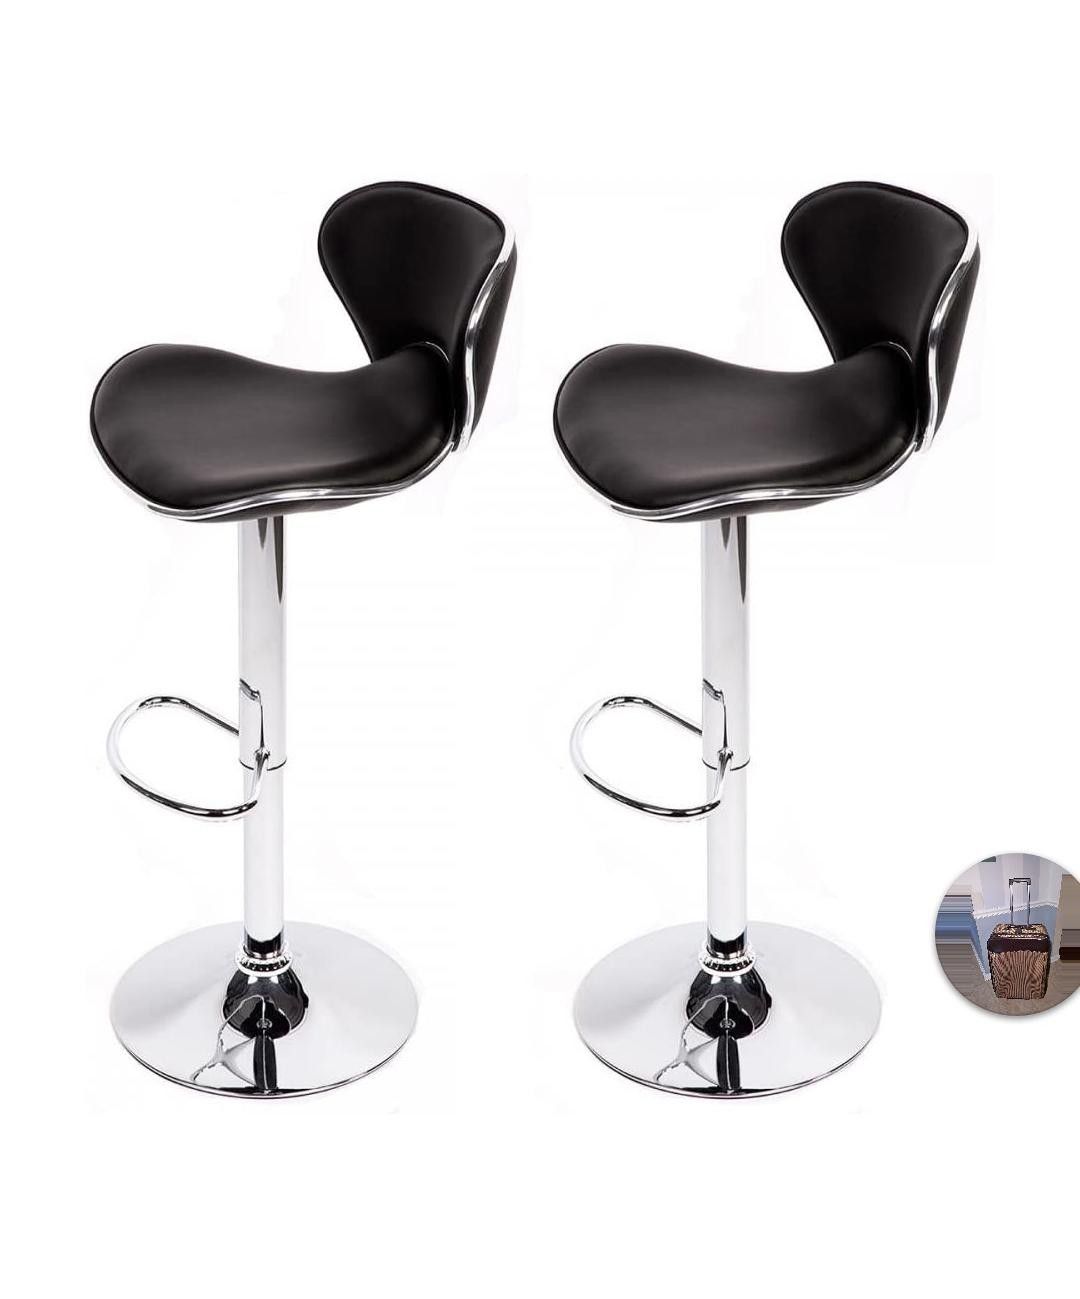 Corliving Set of 2 adjustable leather bar stools